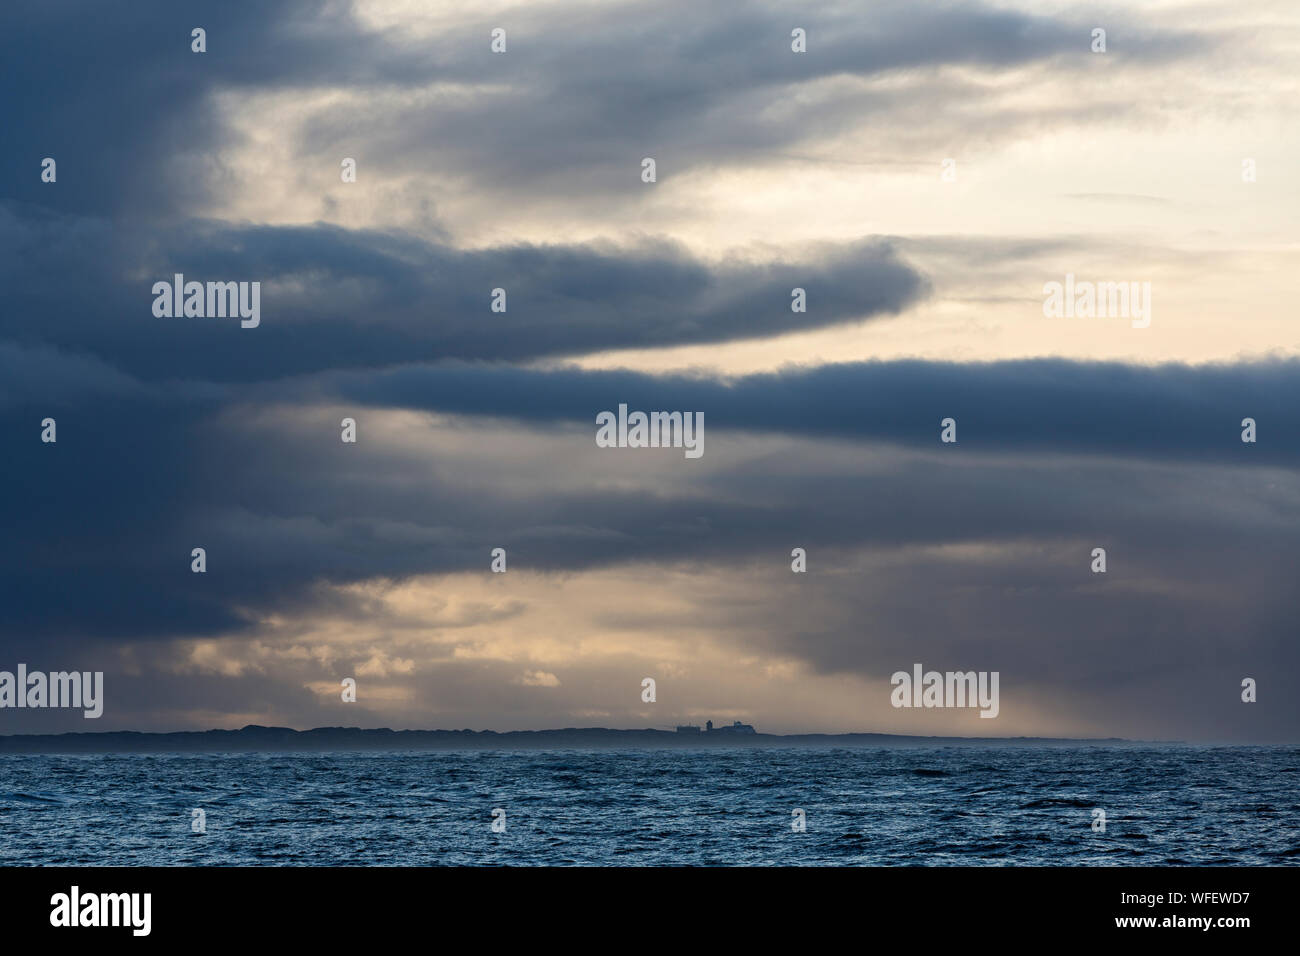 Norderney, Weststrand, Meer, Himmel, Wolken, Sonnenuntergang, Insel Juist, blaue Stunde Foto Stock